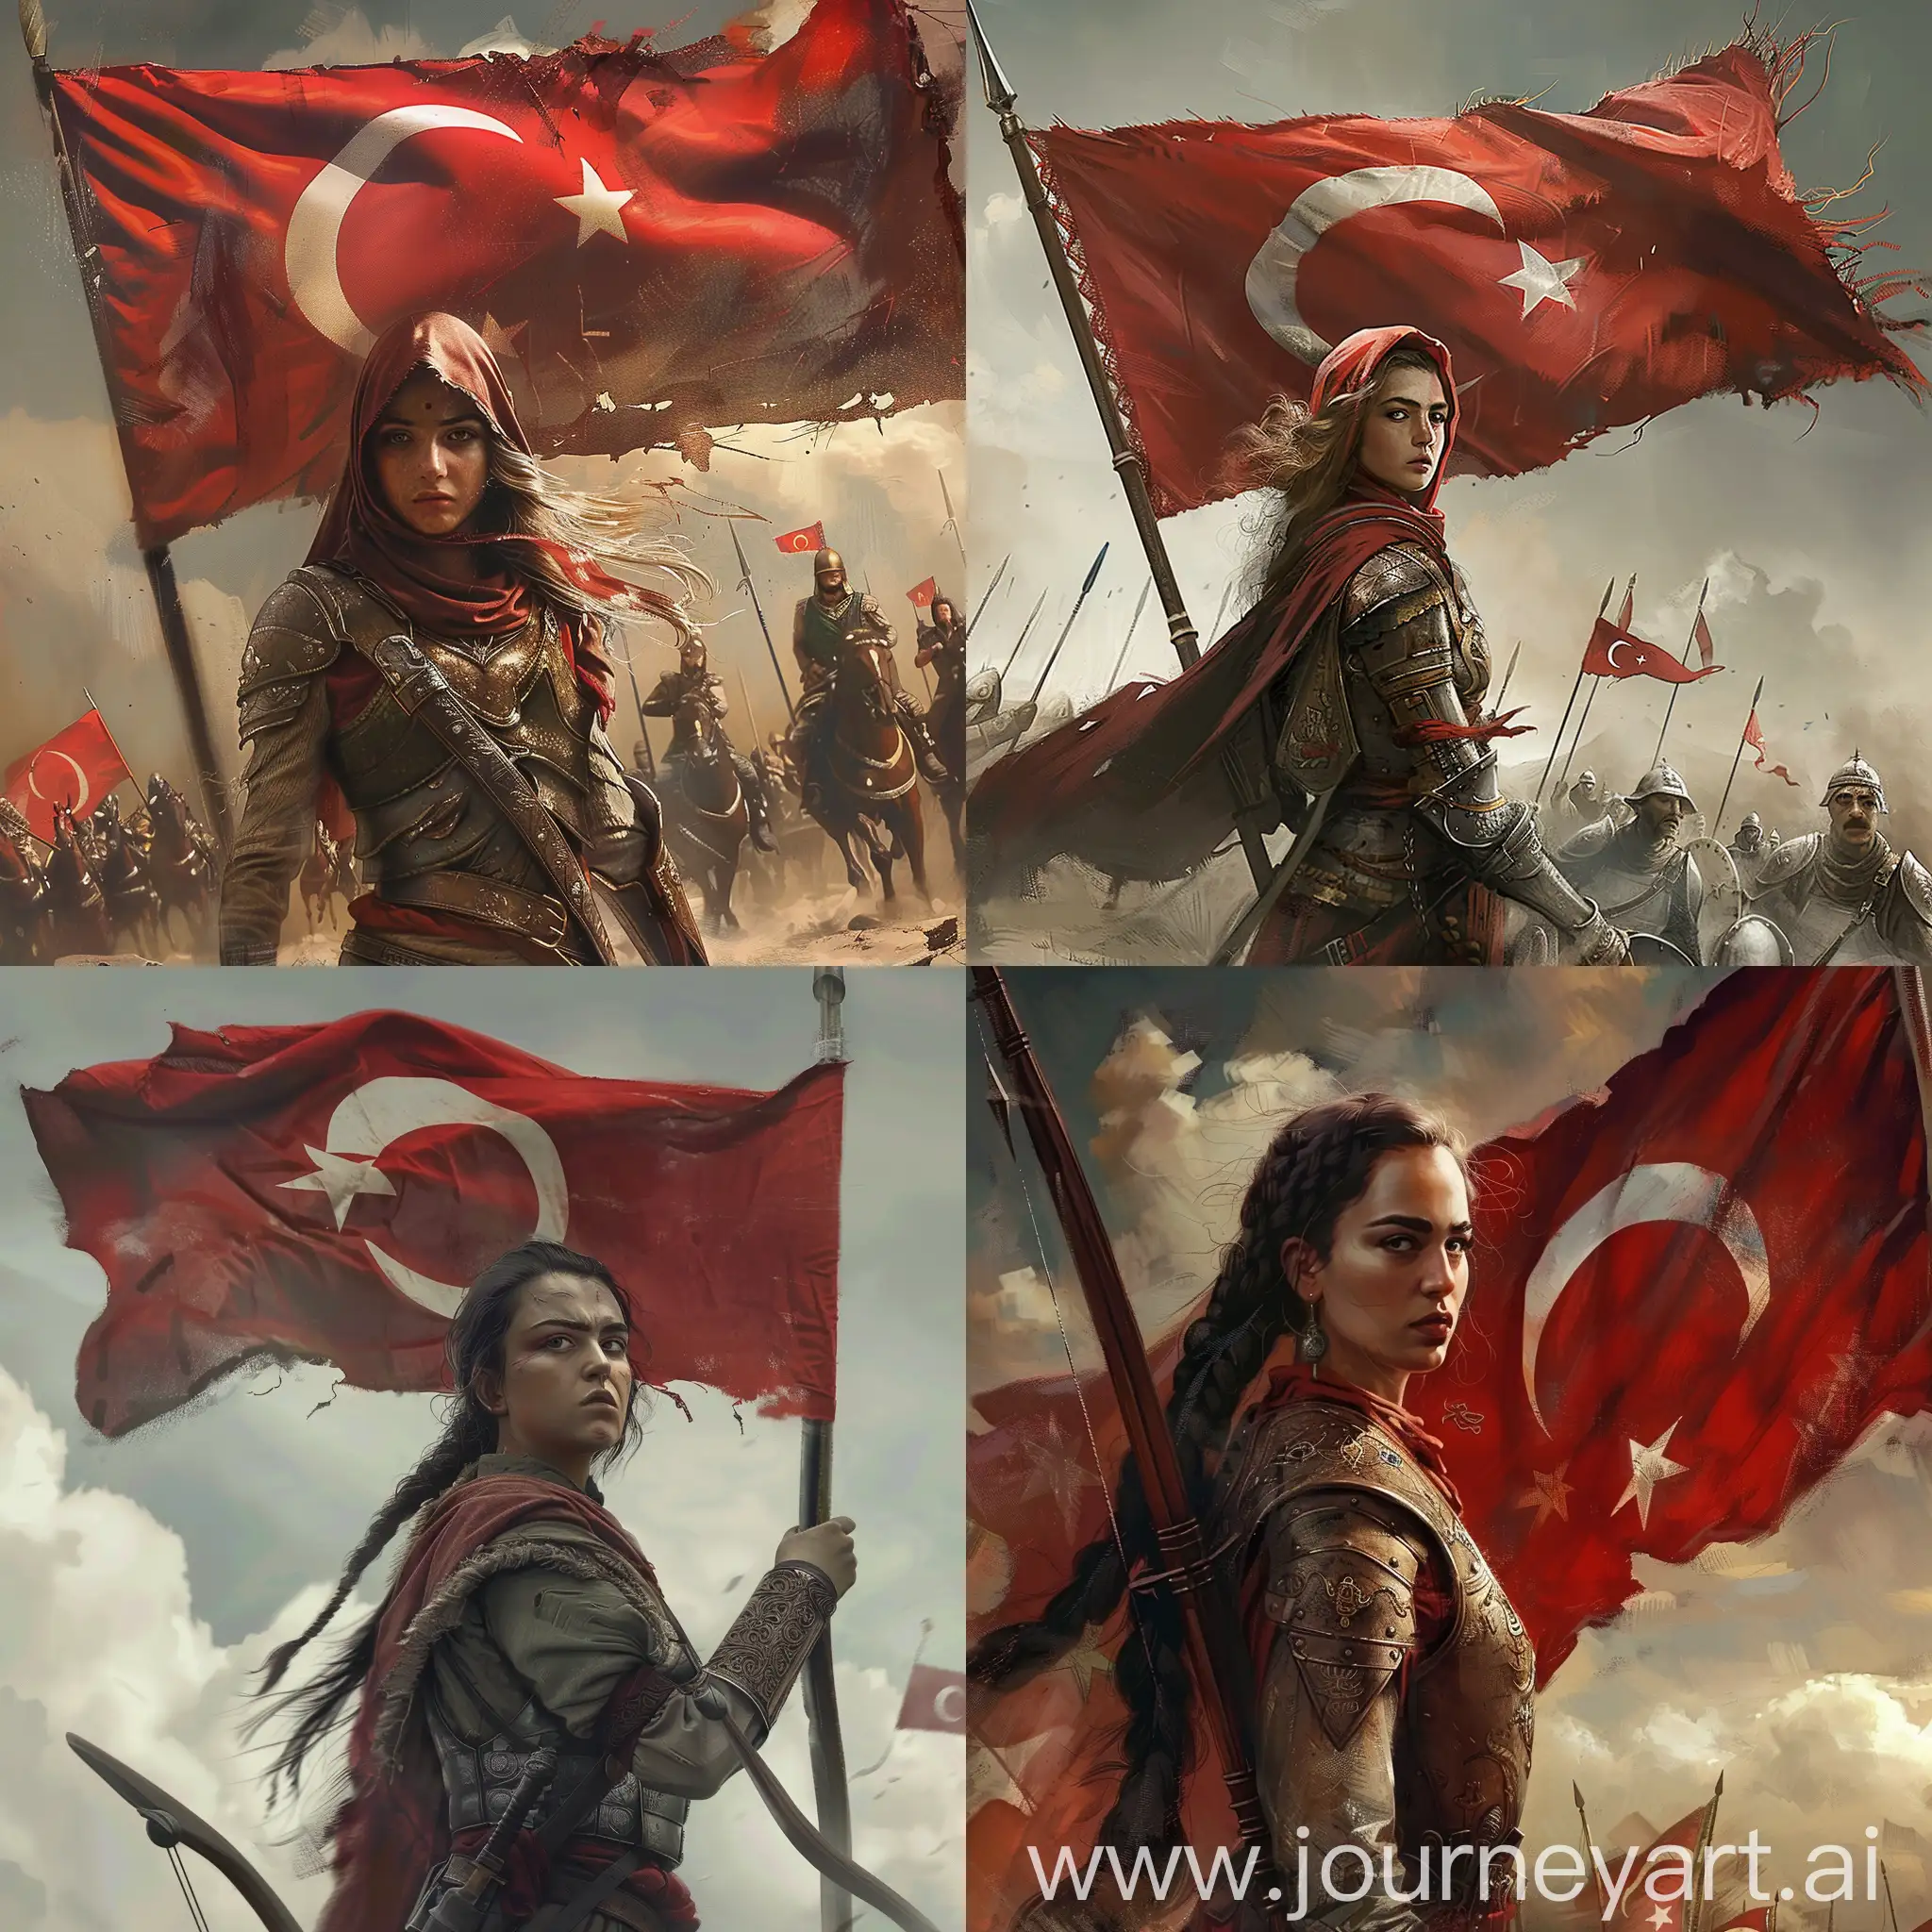 Ottoman warrior , girl realistic , türkish flag

